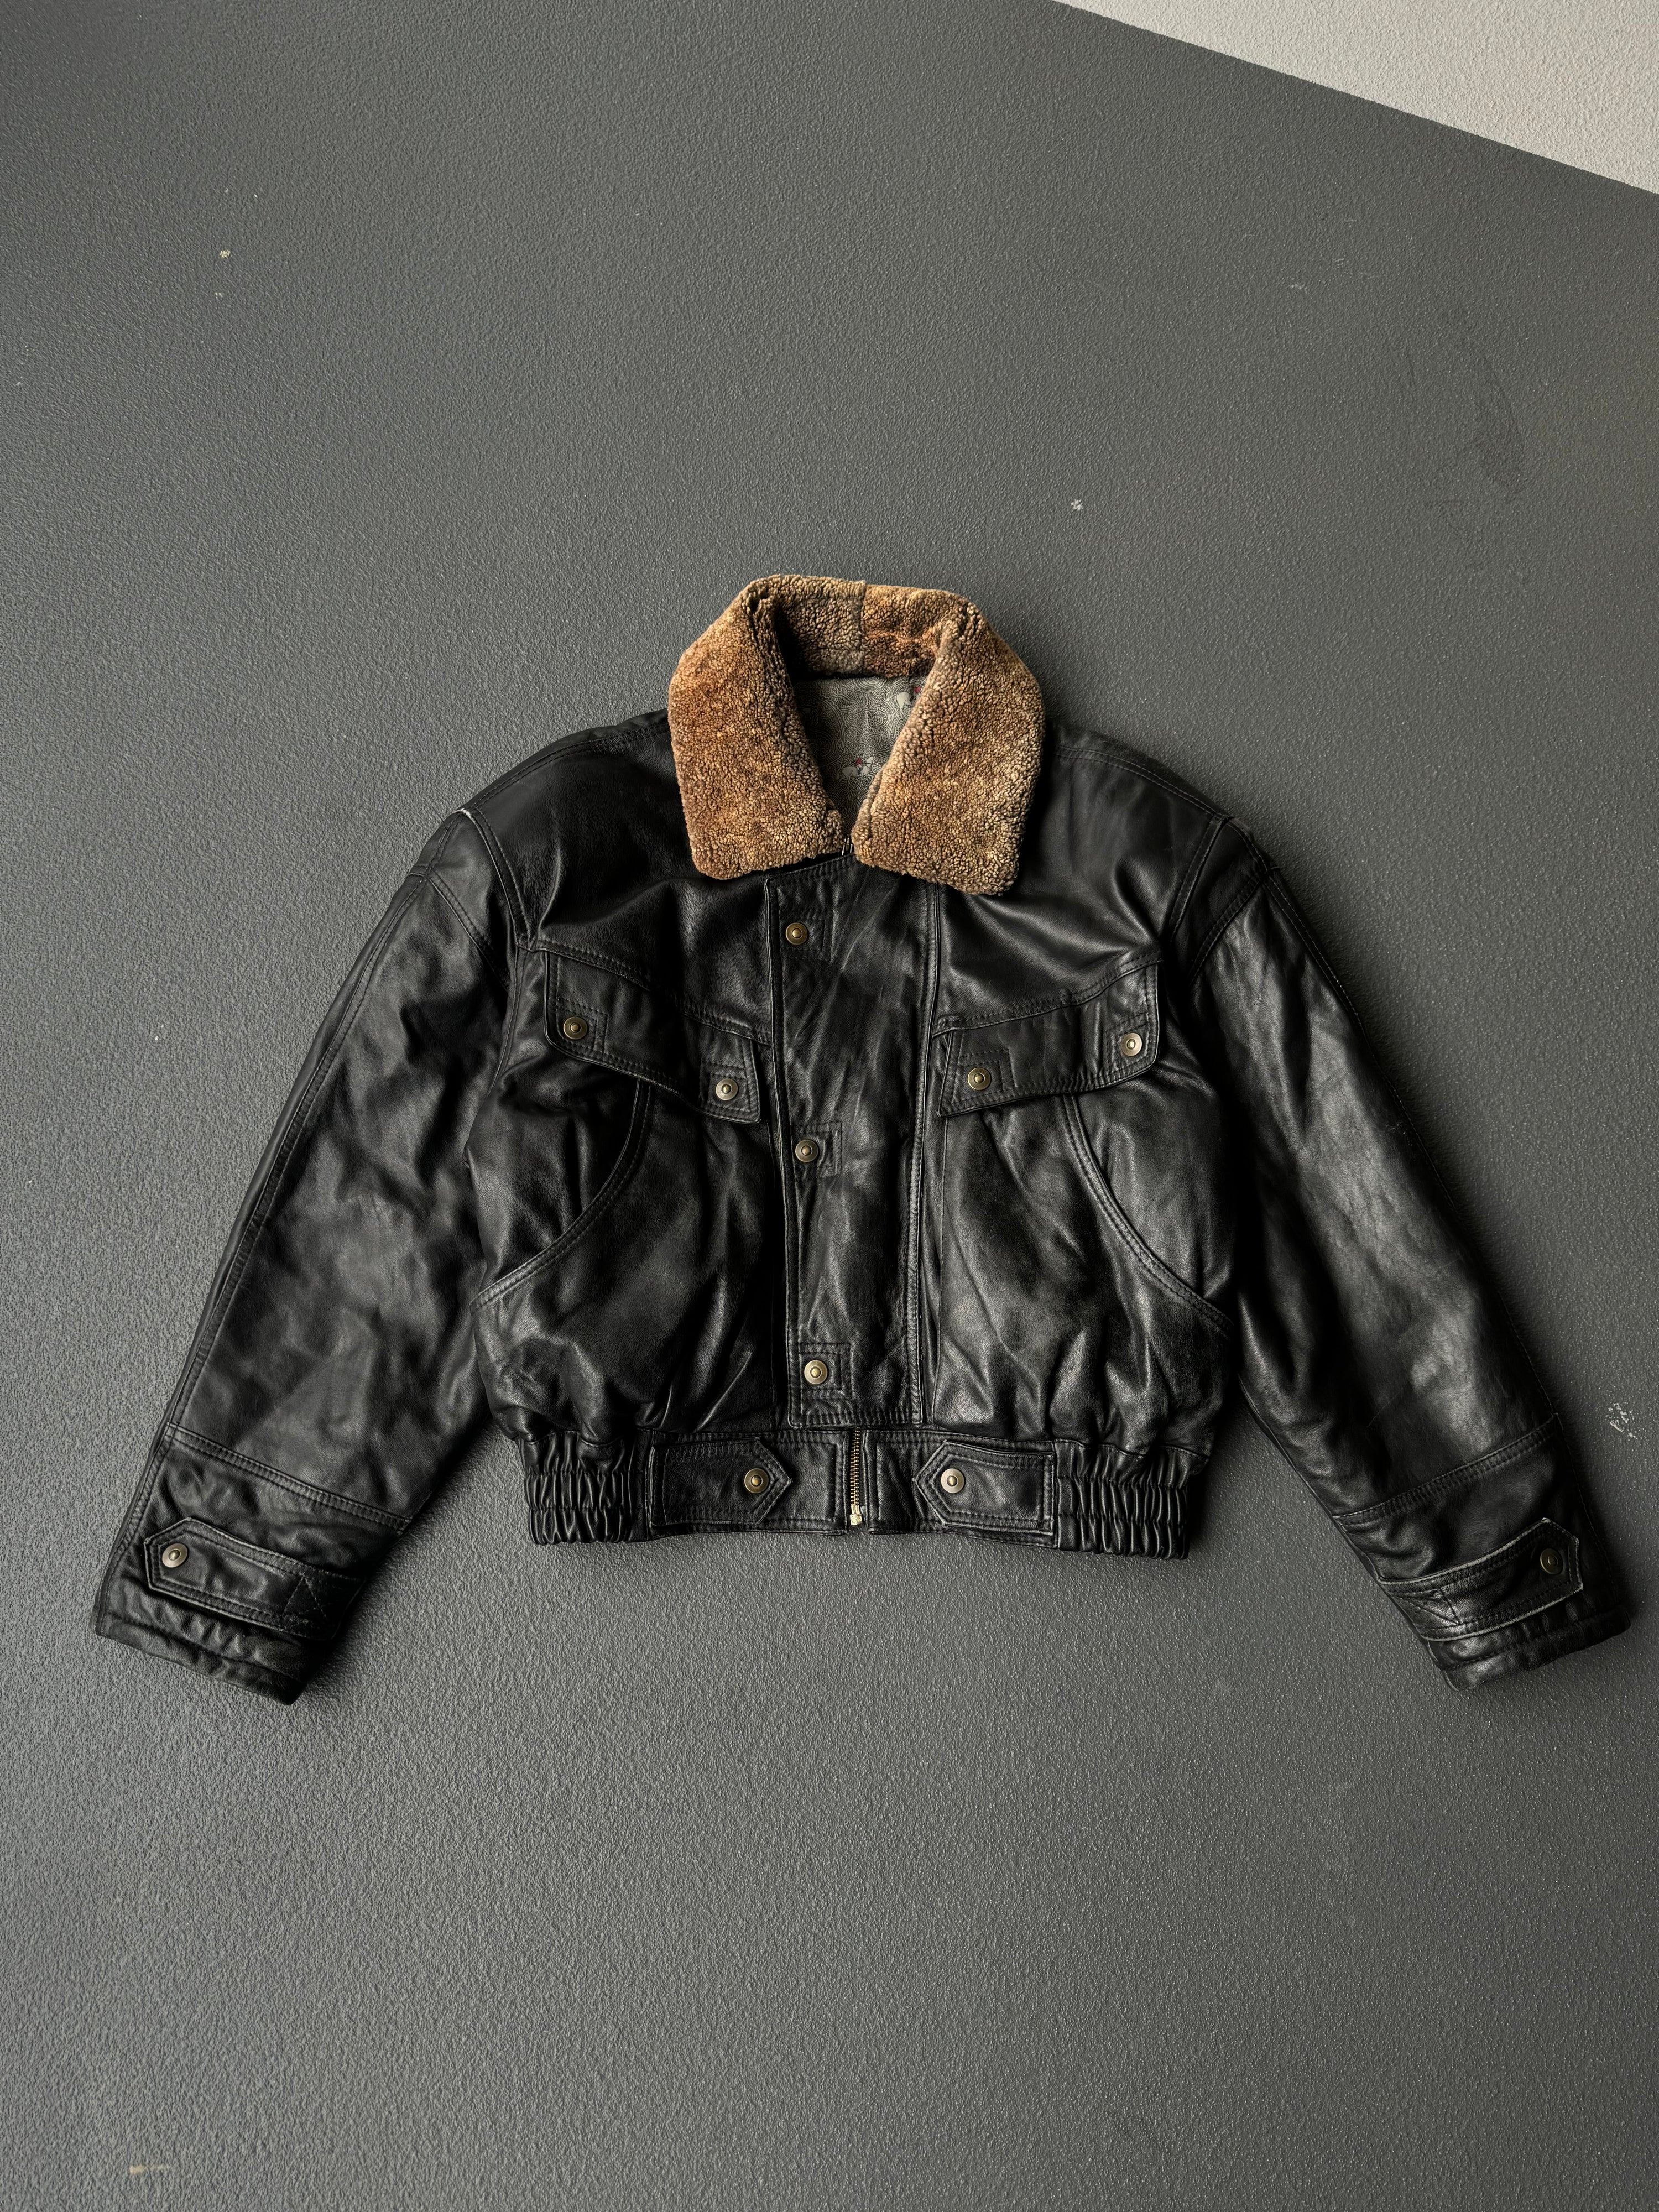 Vintage 80s/90s Heavy Leather Jacket (M)